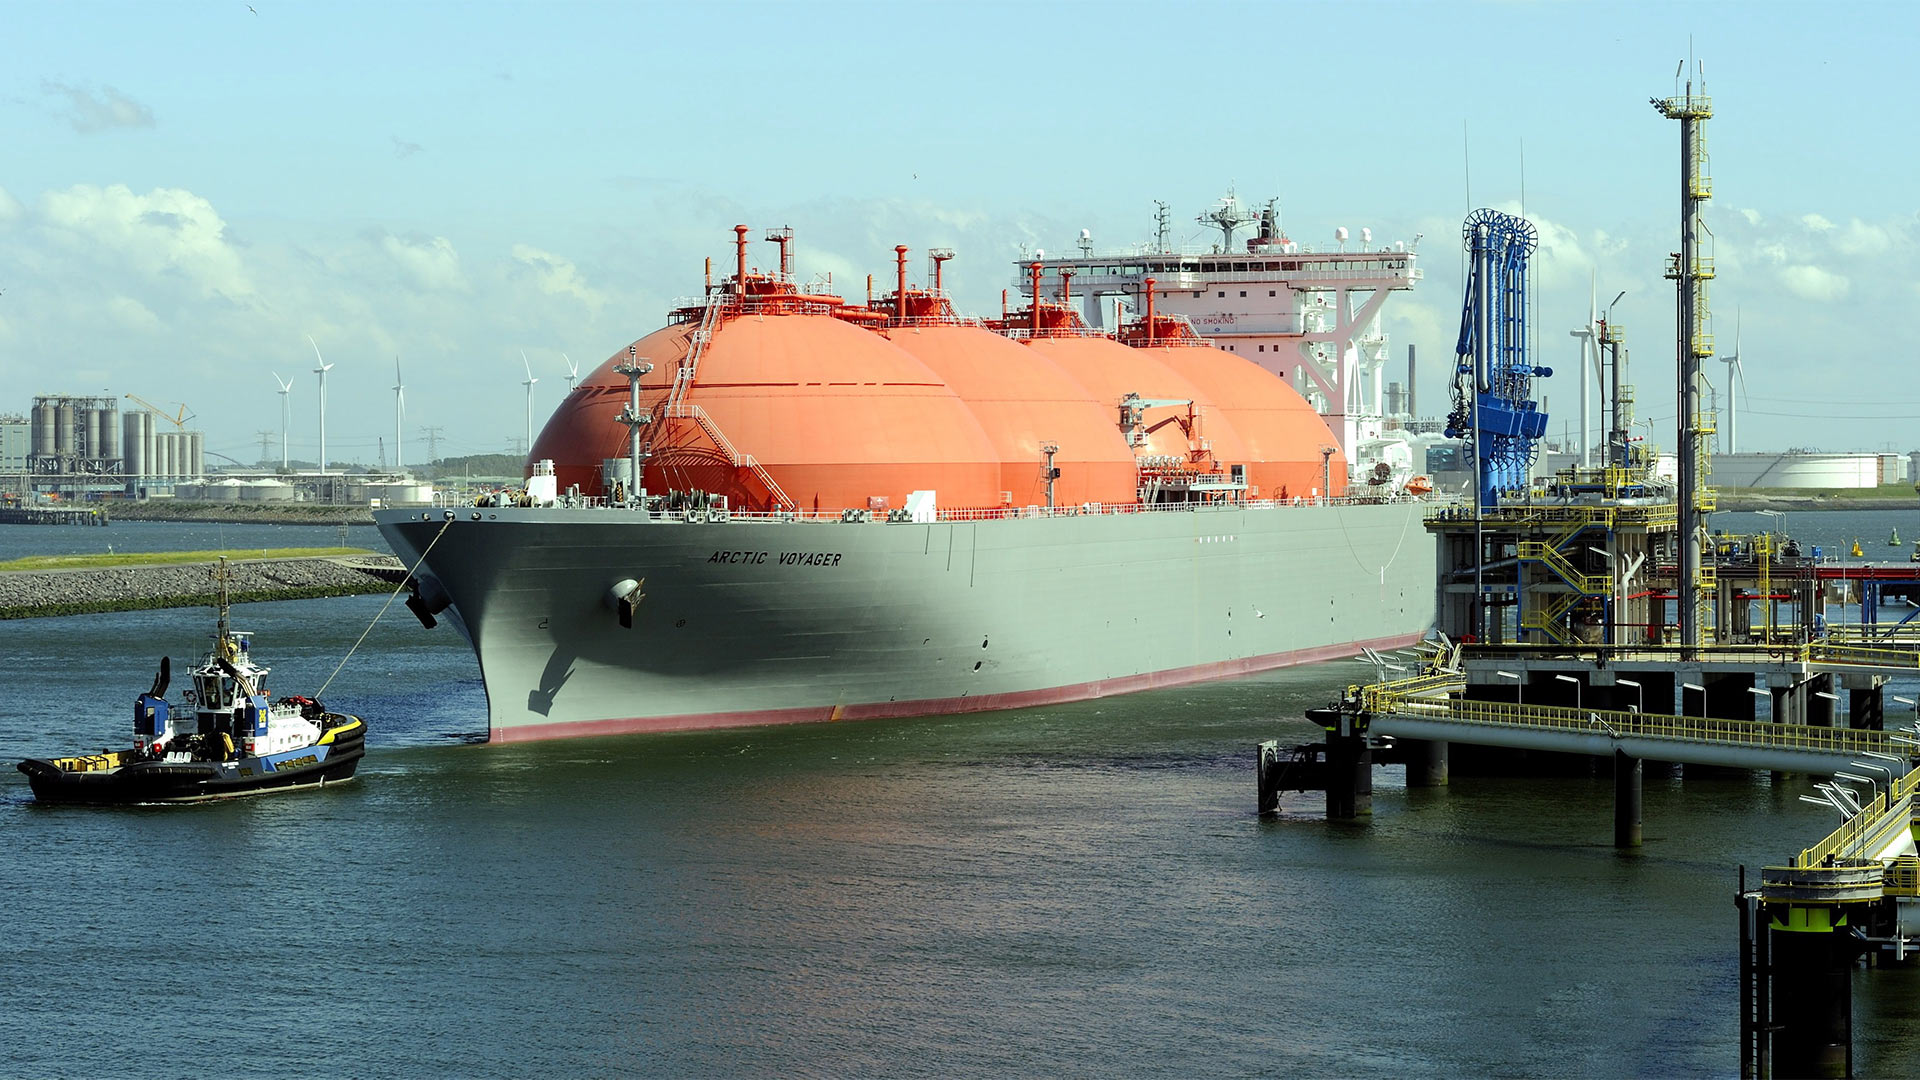 Tankschiff "Artic Voyager" am LNG Terminal Rotterdam | picture alliance / dpa